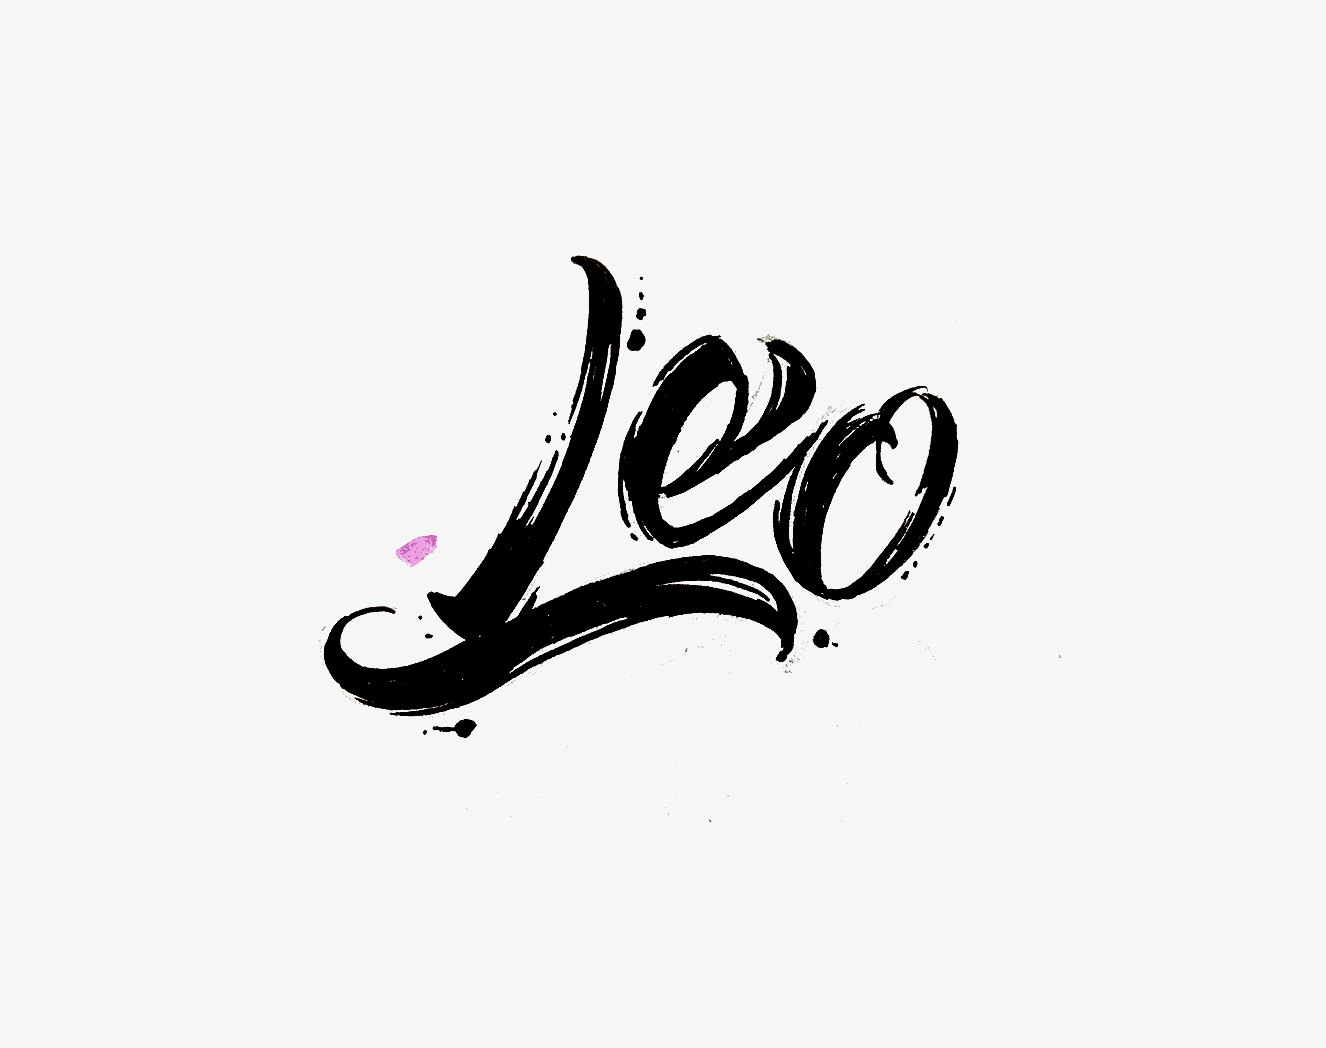 Leo Cyber Security - 3 Logo designs, Black on White